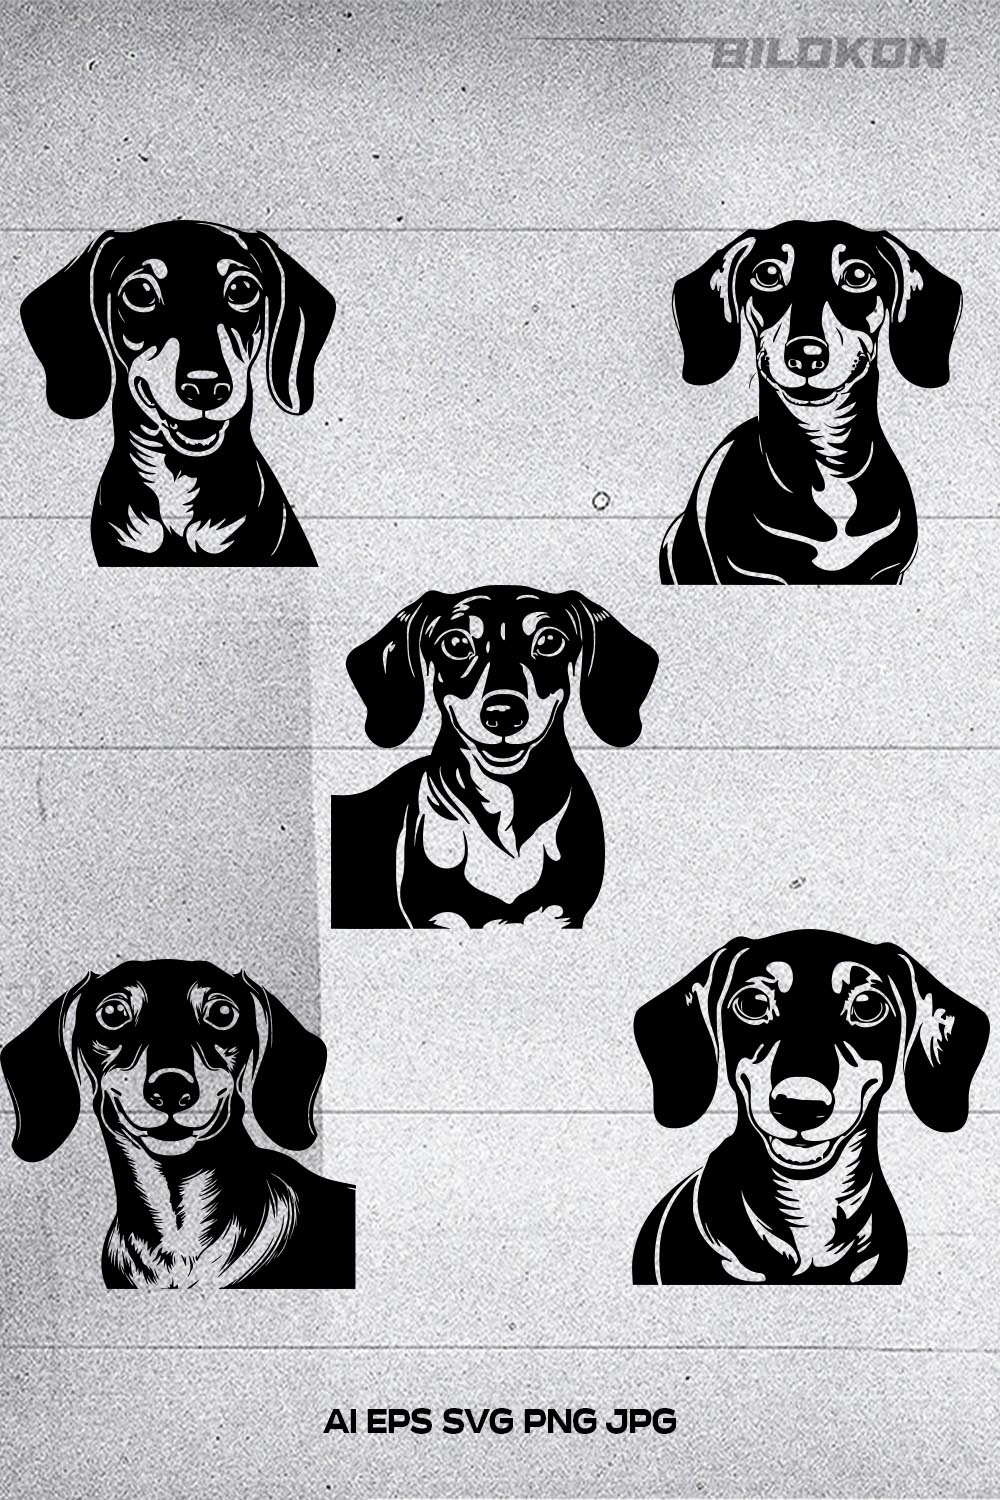 Dachshund dog face, SVG, Vector, Illustration pinterest preview image.